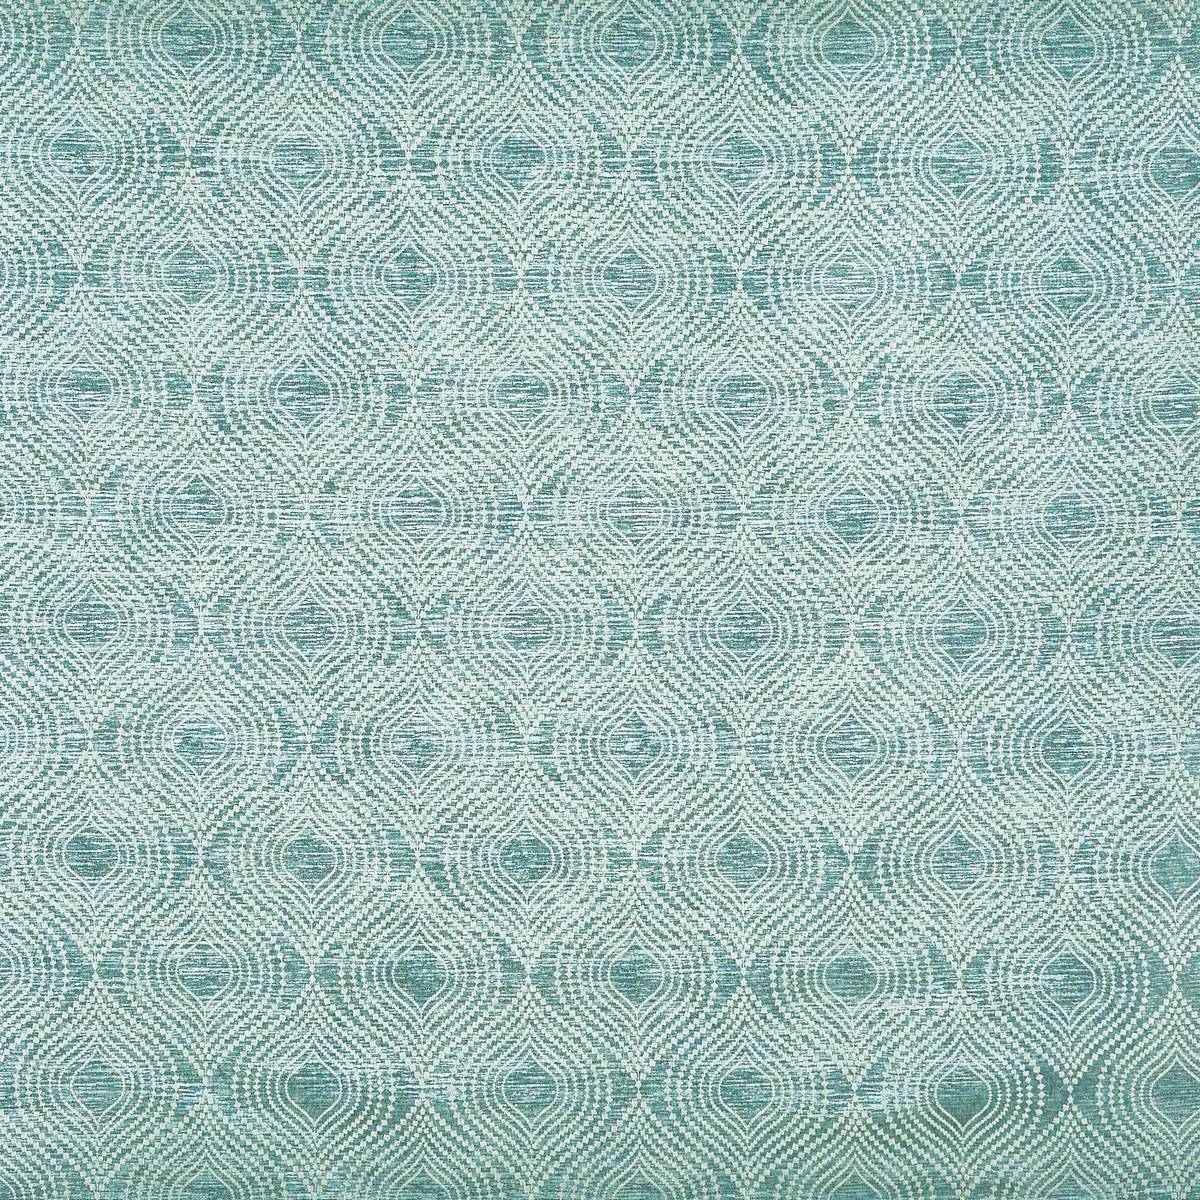 Radiance Surf Fabric by Prestigious Textiles